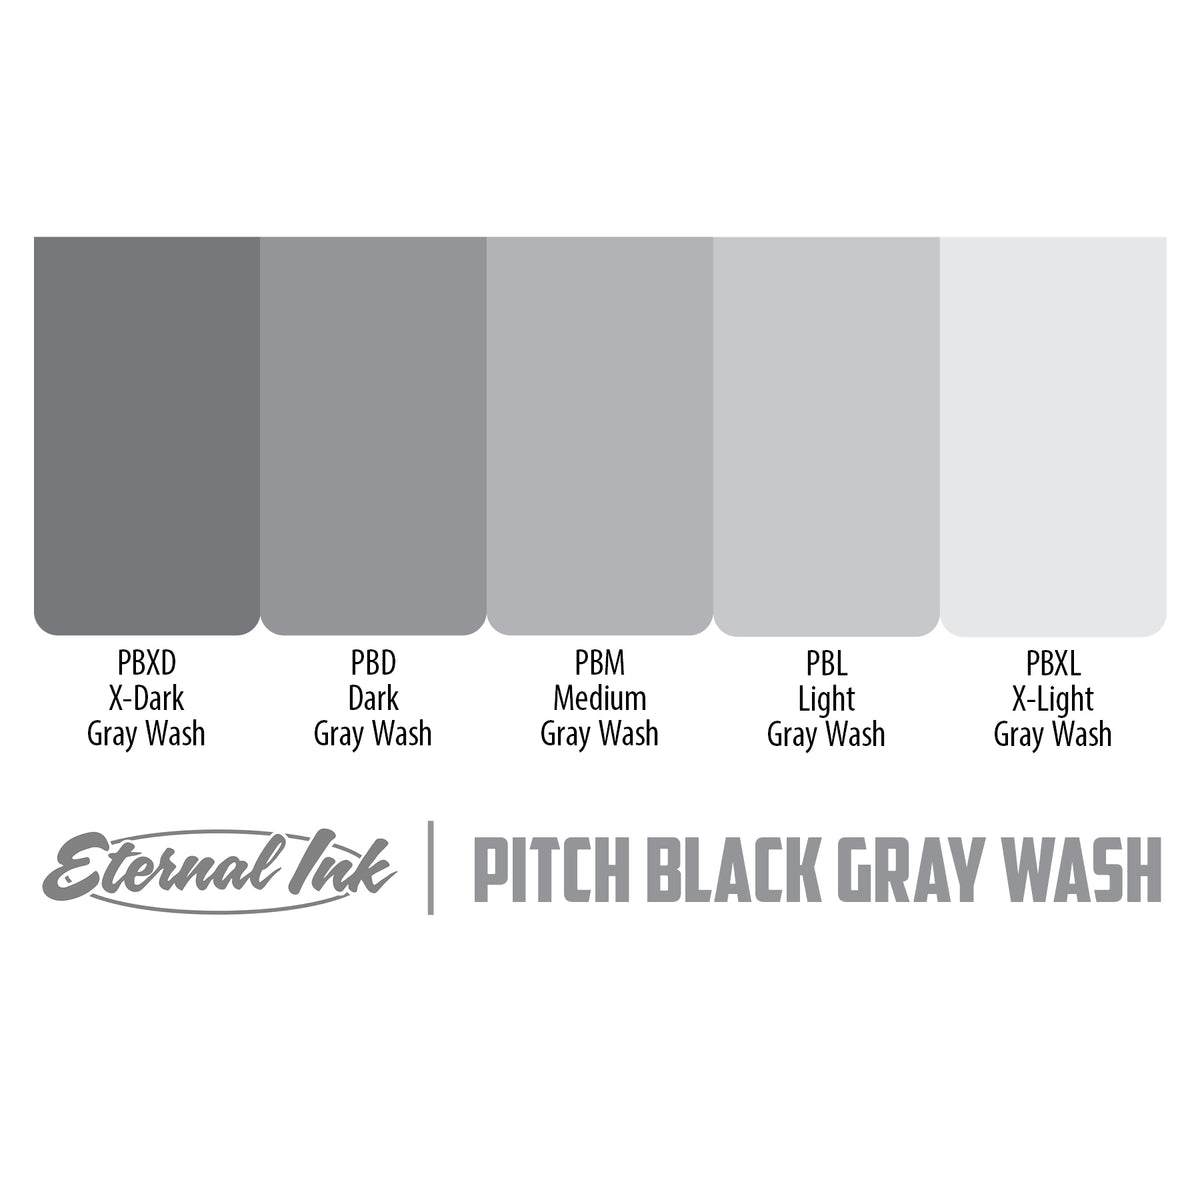 Pitch Black Gray Wash Set